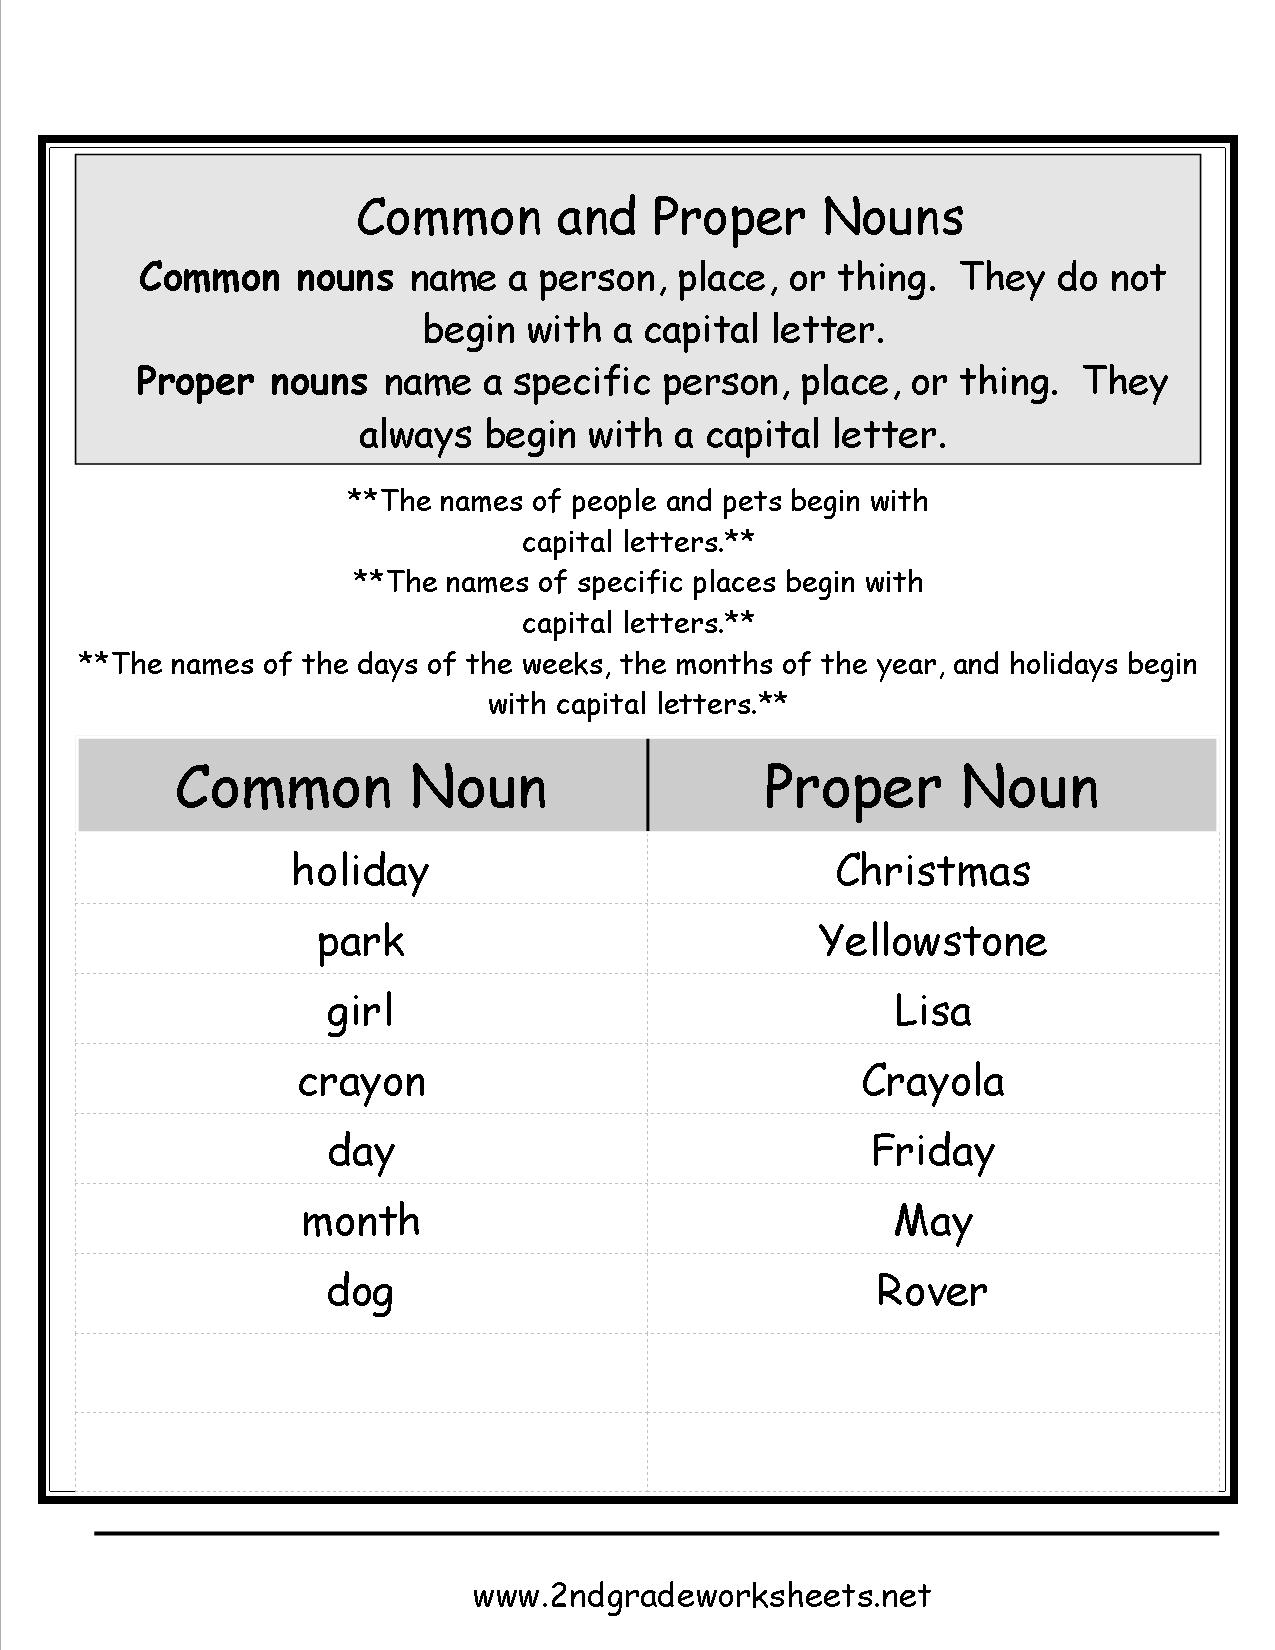 common-and-proper-noun-worksheet-for-class-3-www-theteachersguide-nouns-worksheet